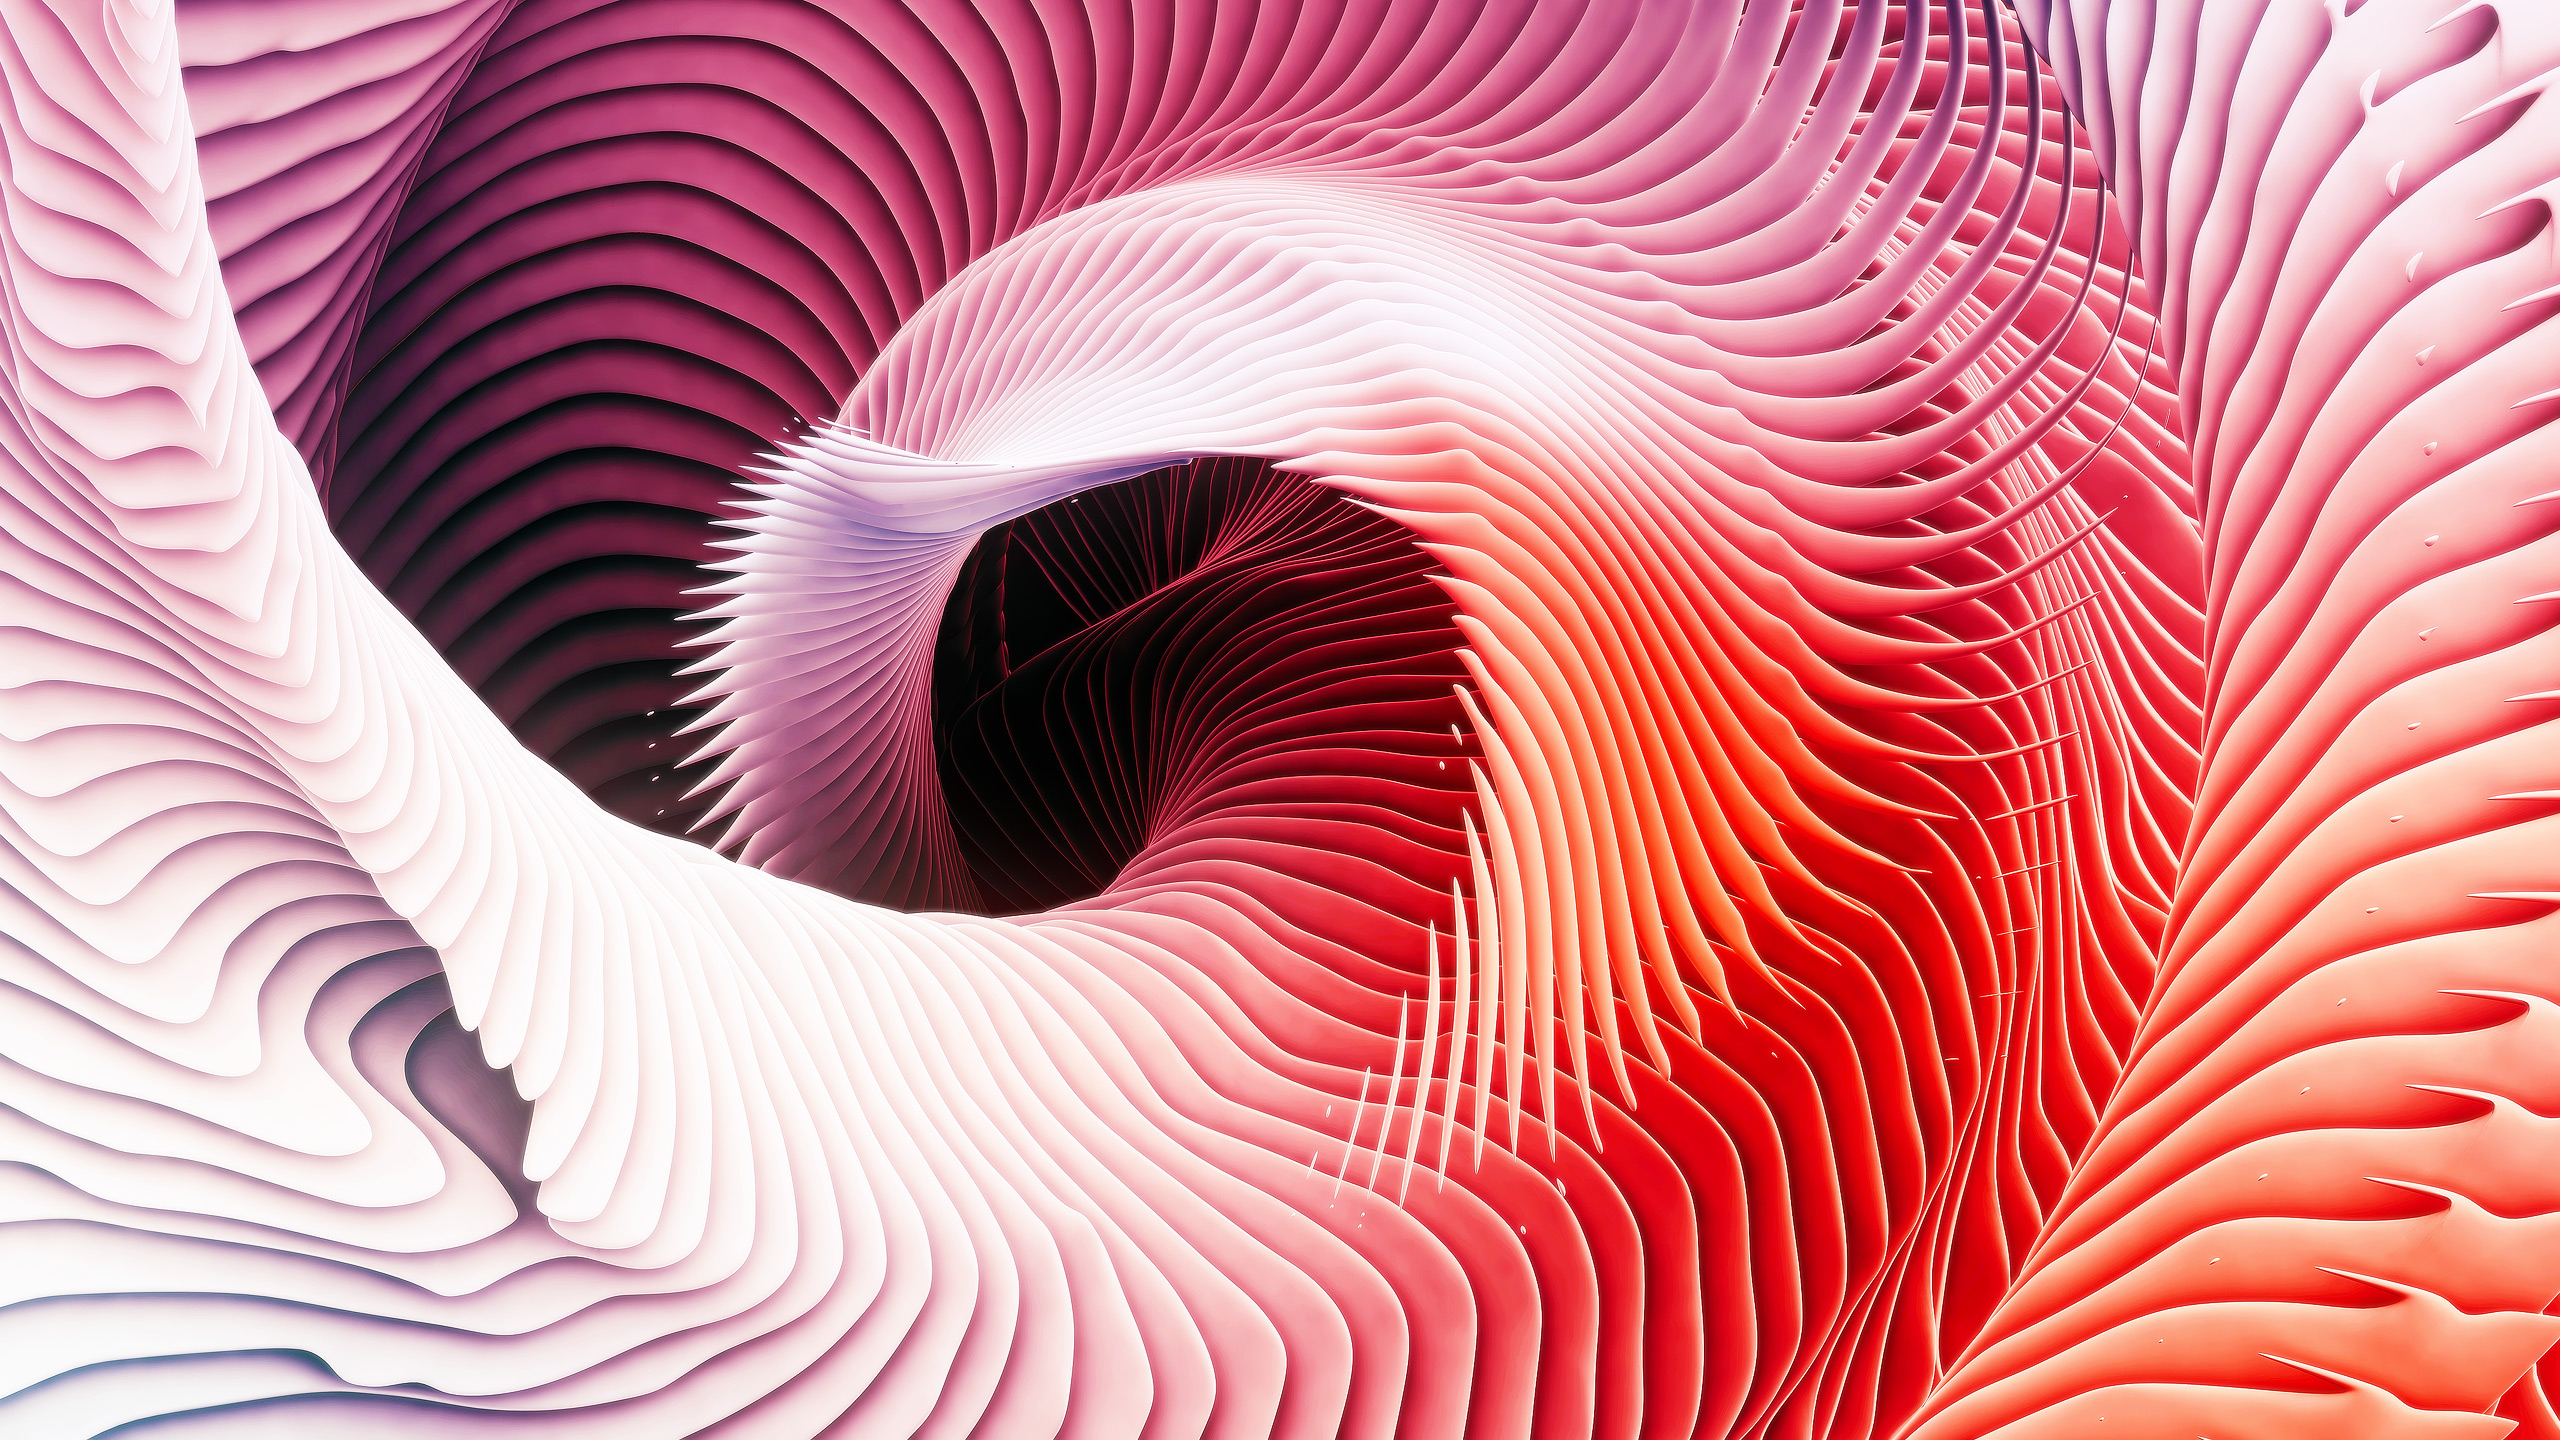 apple macbook pro wallpaper,pink,pattern,spiral,fractal art,line